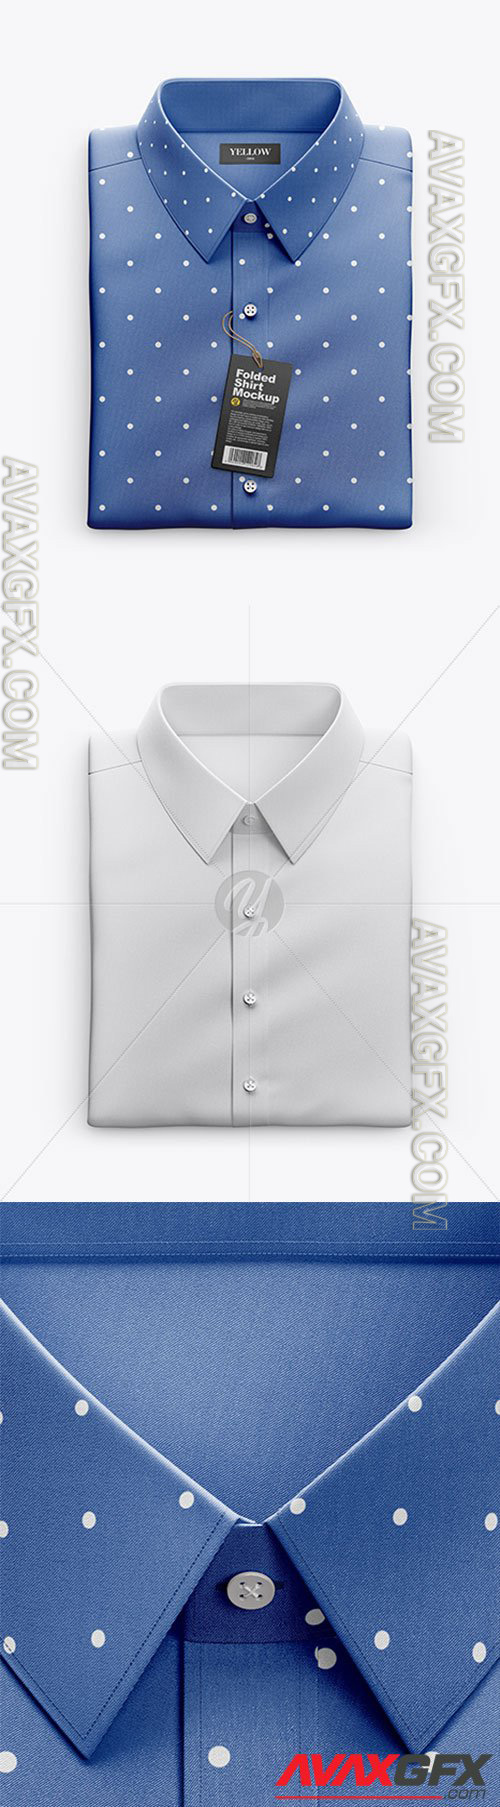 Folded Shirt Mockup - Top View 25987